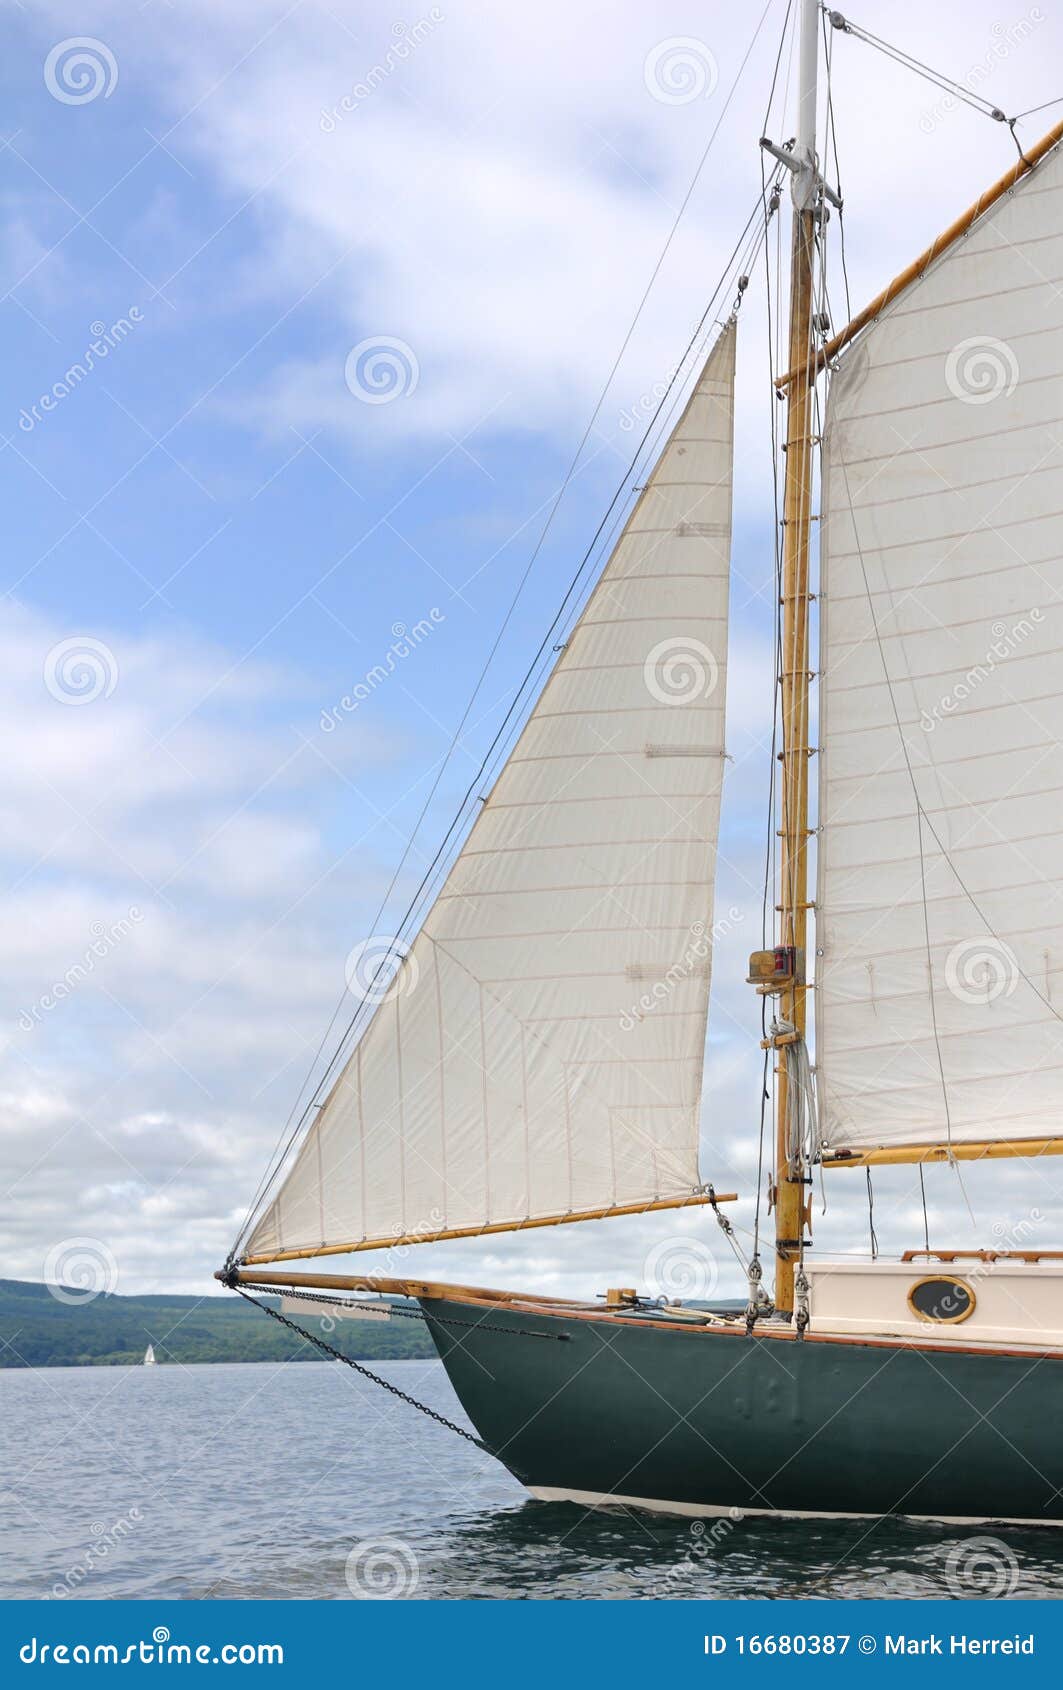 Jib, Foresail And Wooden Mast Of Schooner Sailboat Royalty 